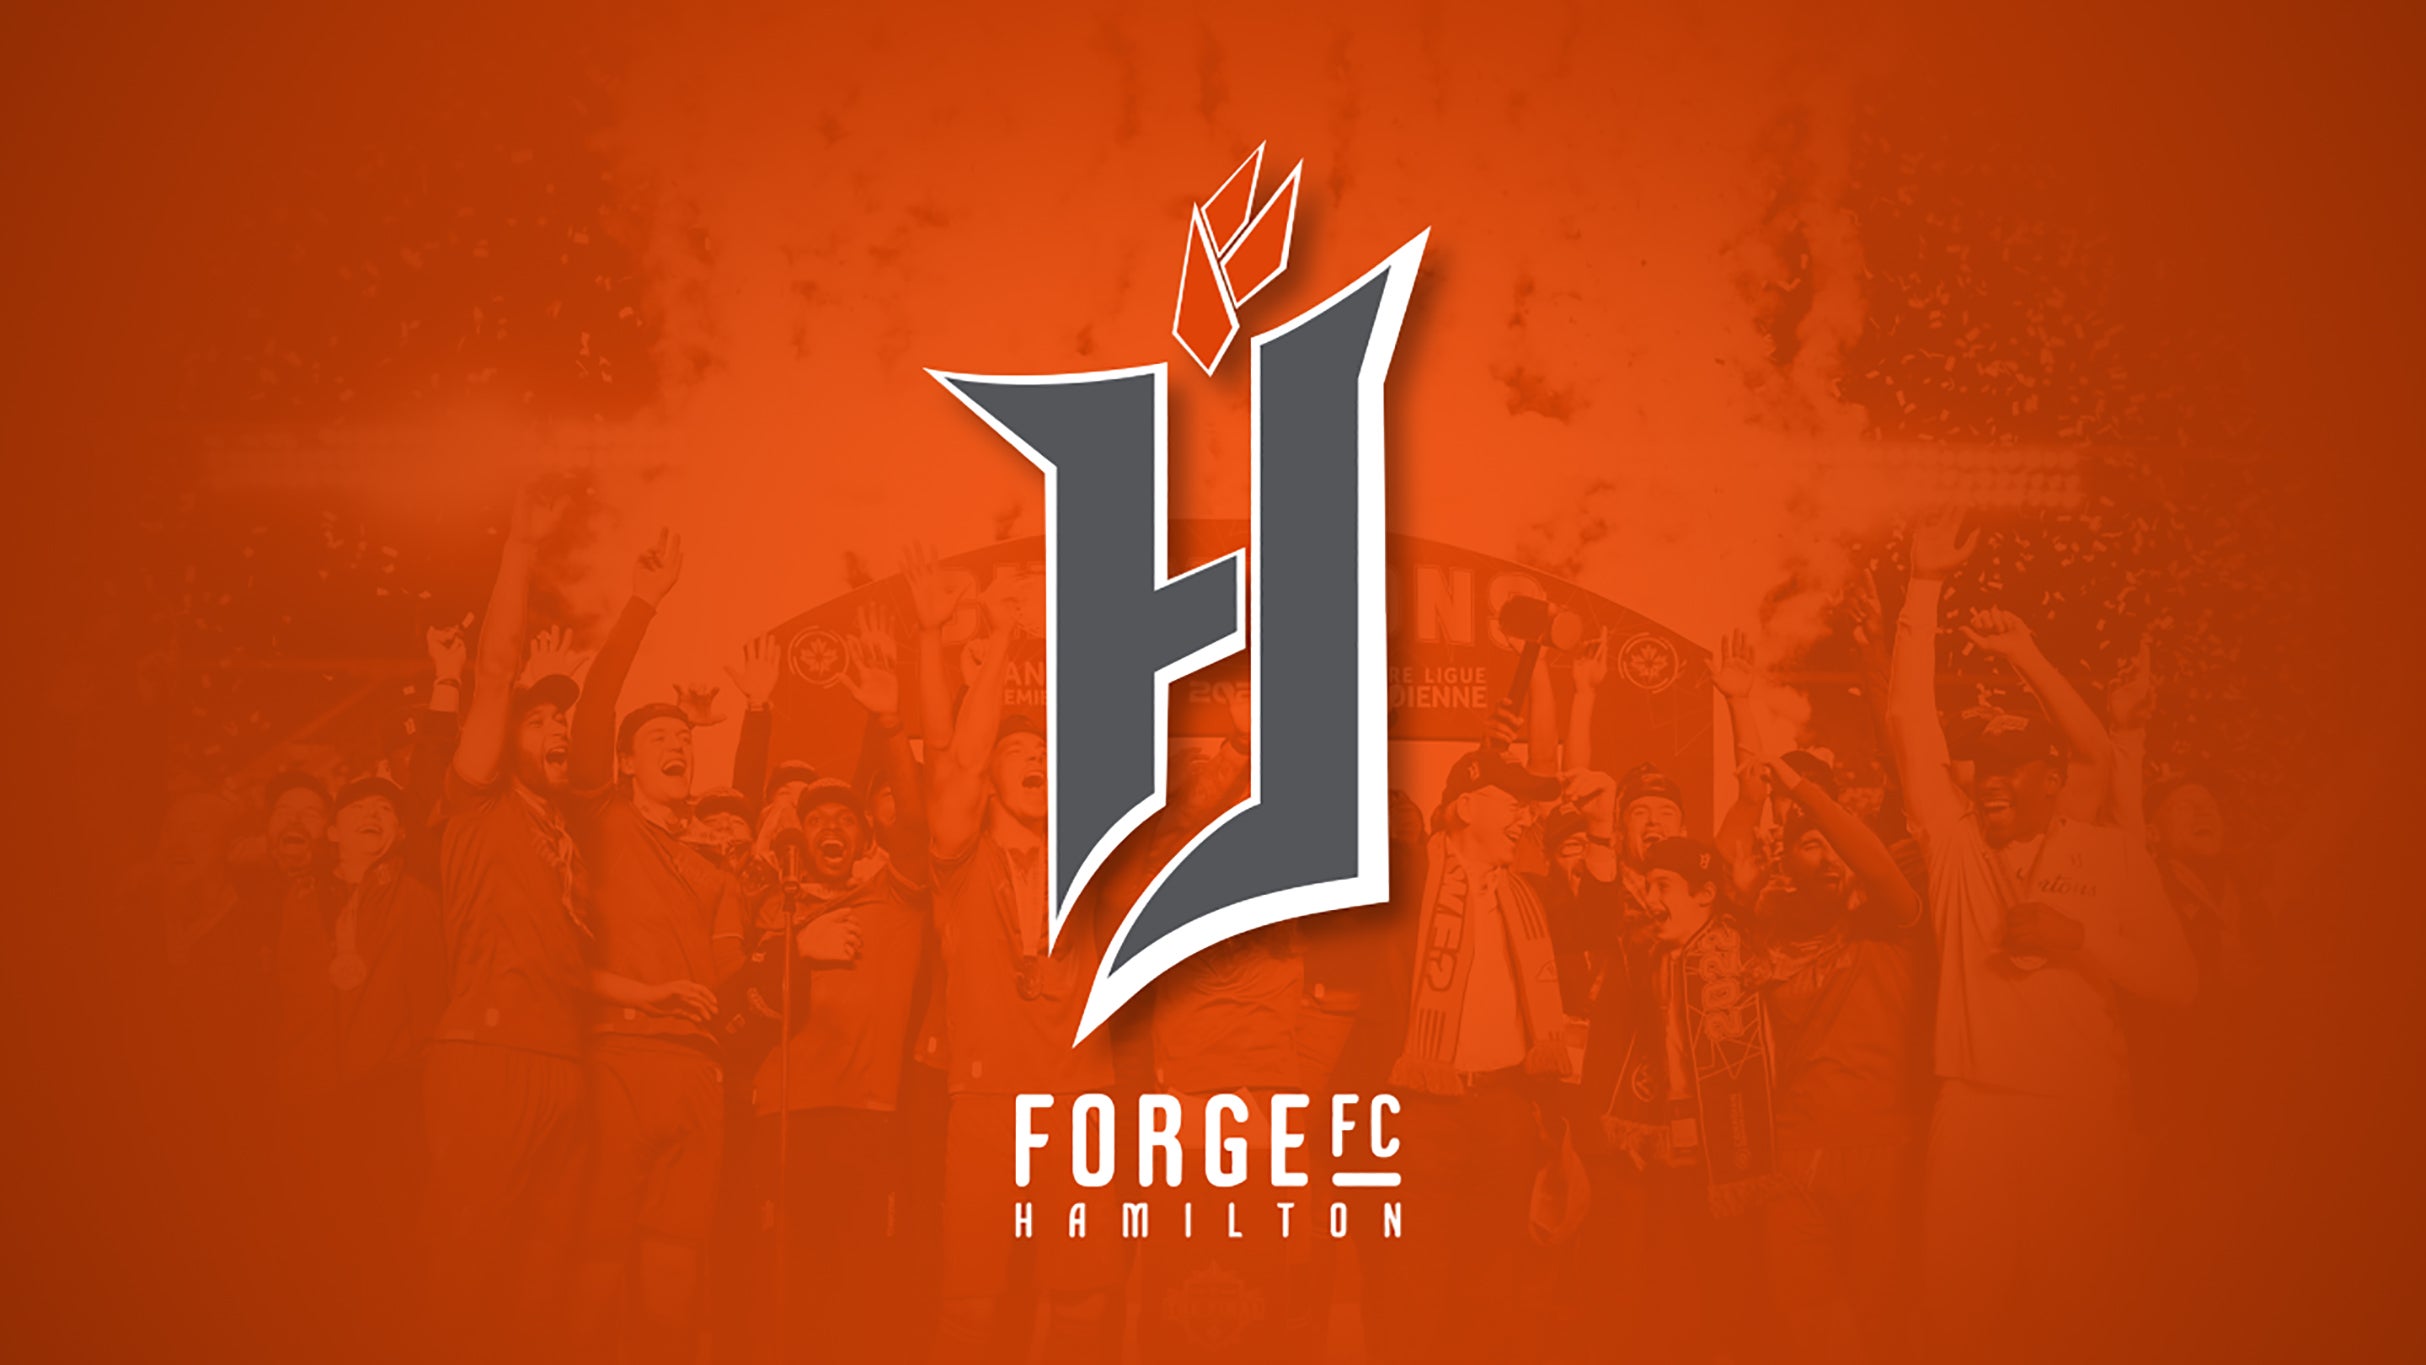 Forge FC vs. Cavalry FC in Hamilton promo photo for Westjet Rewards  presale offer code